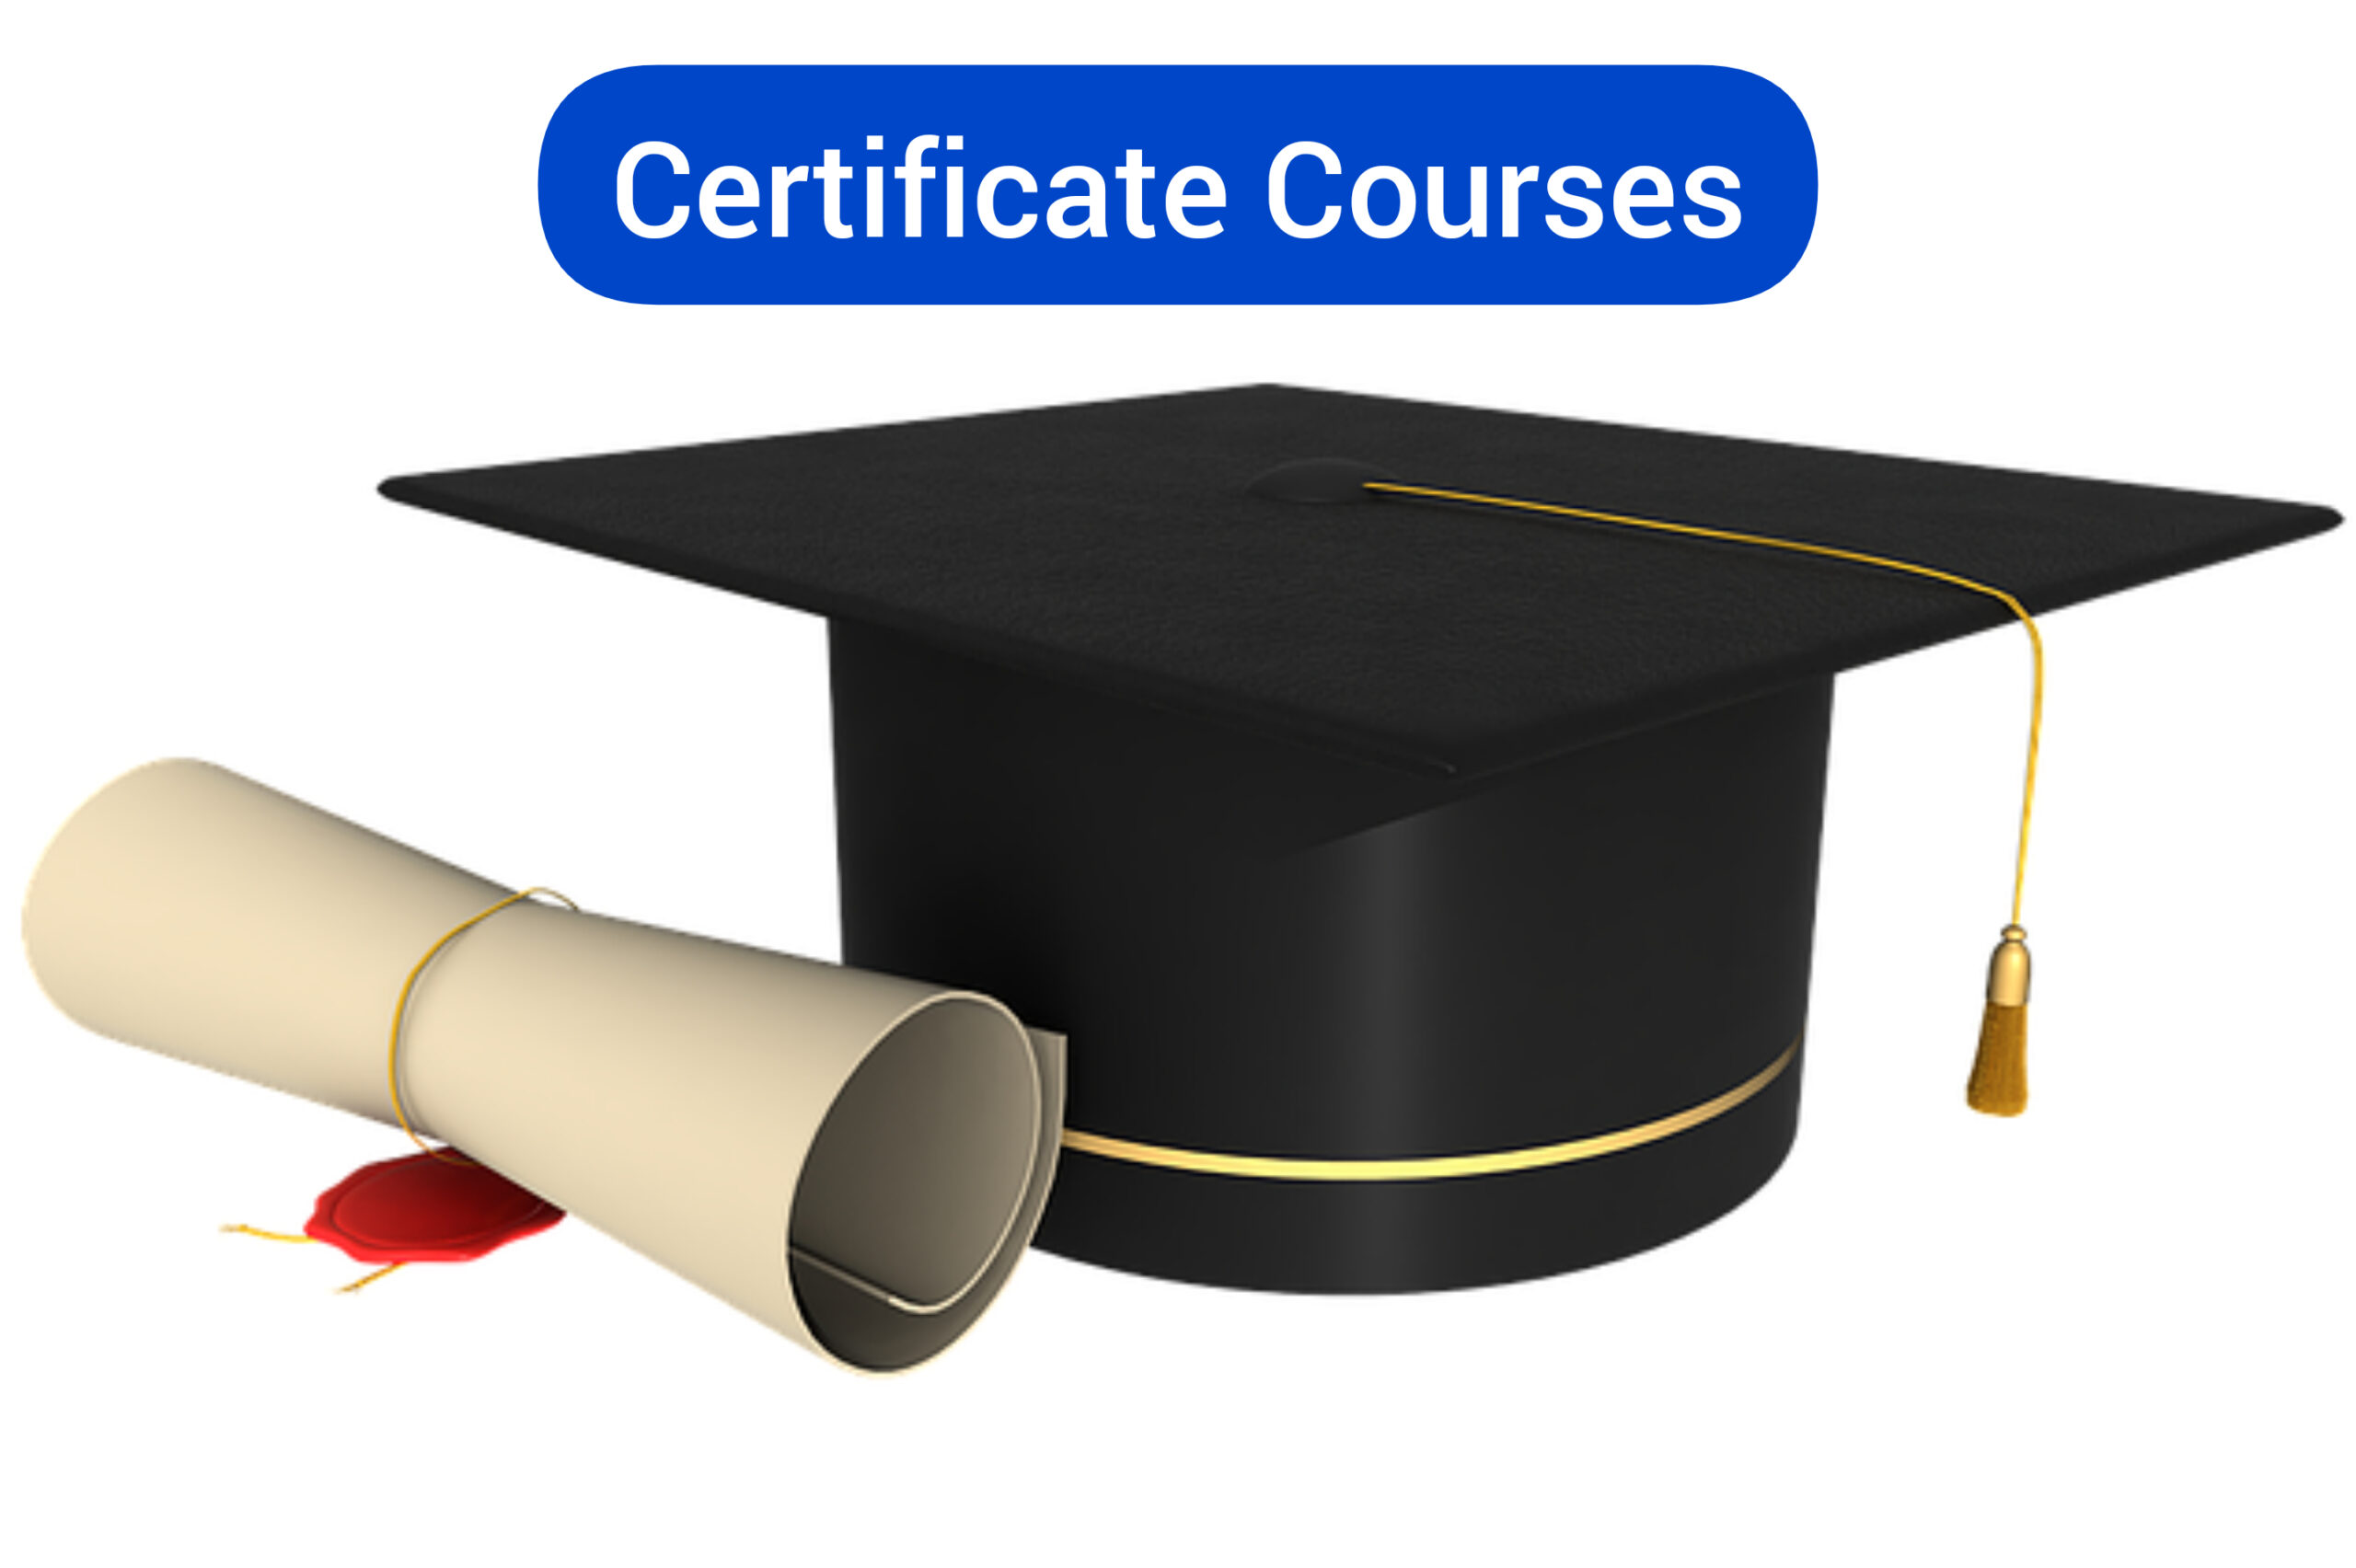 Certificate Courses - kenyanmagazine.co.ke